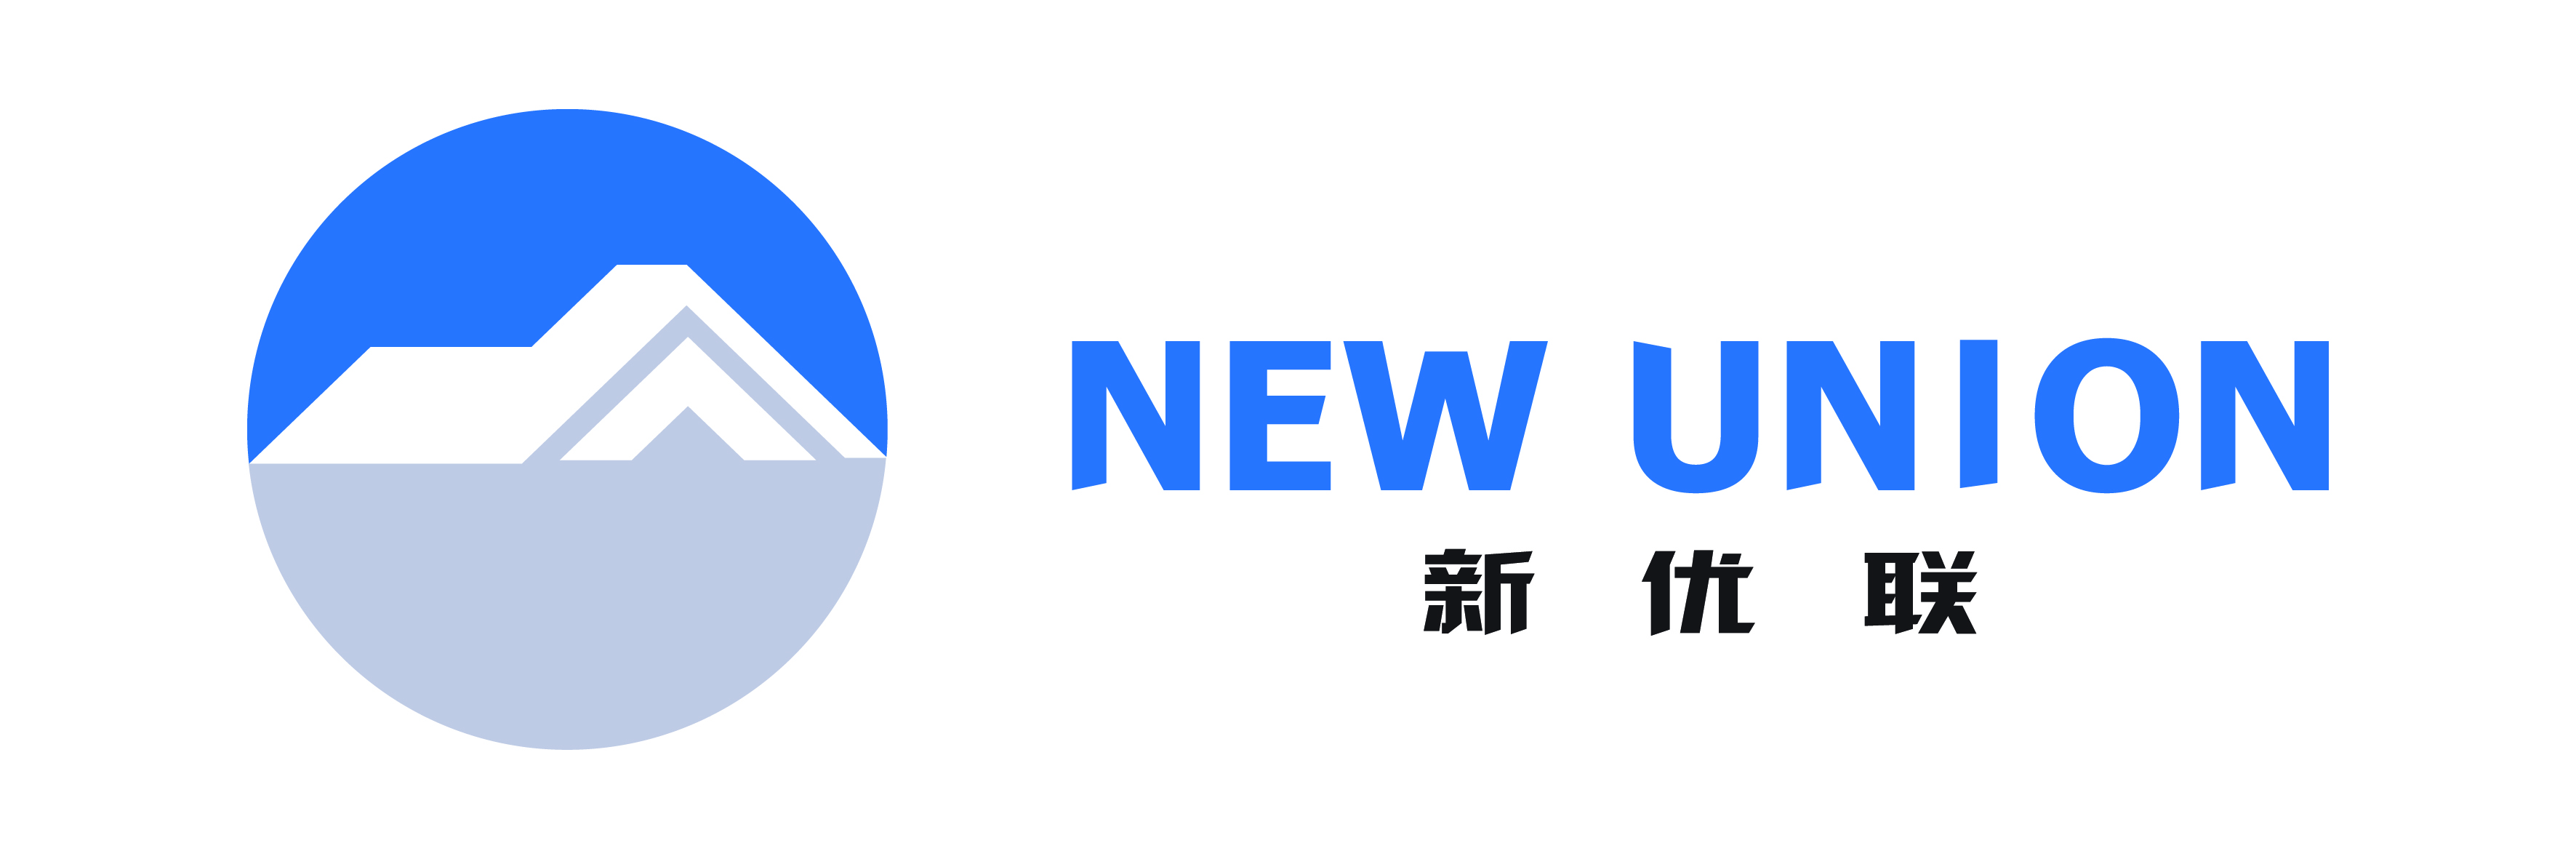 Lanzhou new union industry co. LTD